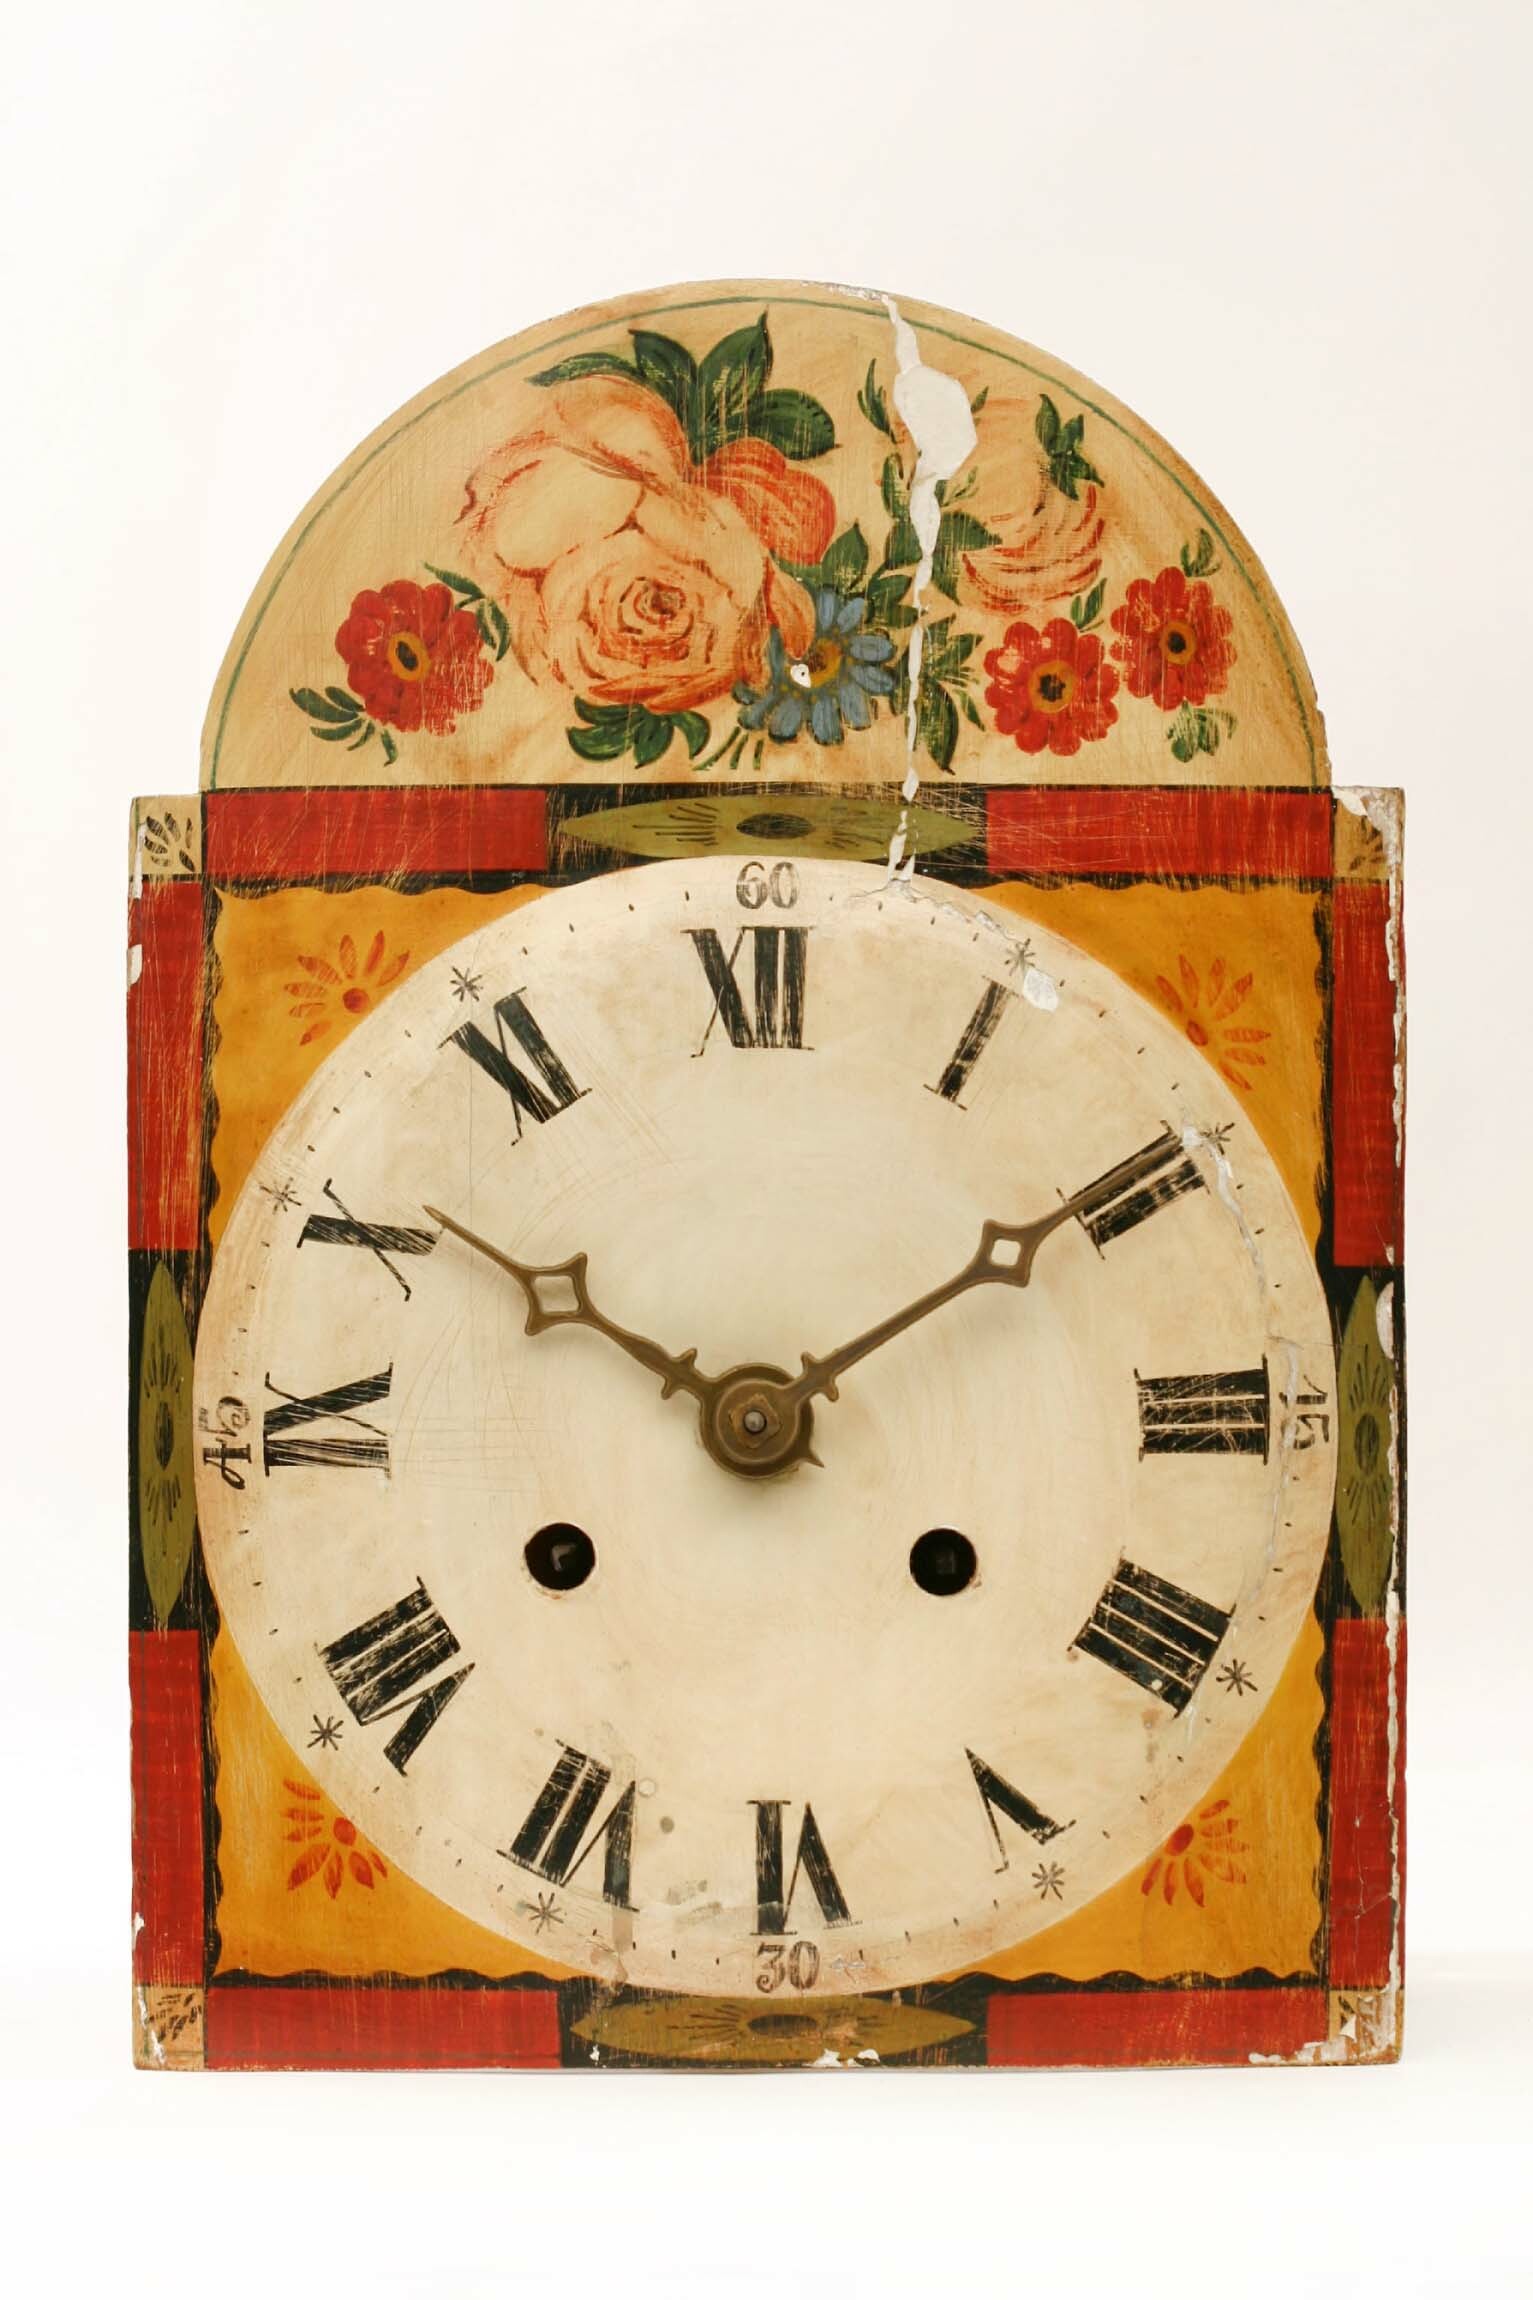 Lackschilduhr, Michael Kuß, Furtwangen um 1840 (Deutsches Uhrenmuseum CC BY-SA)